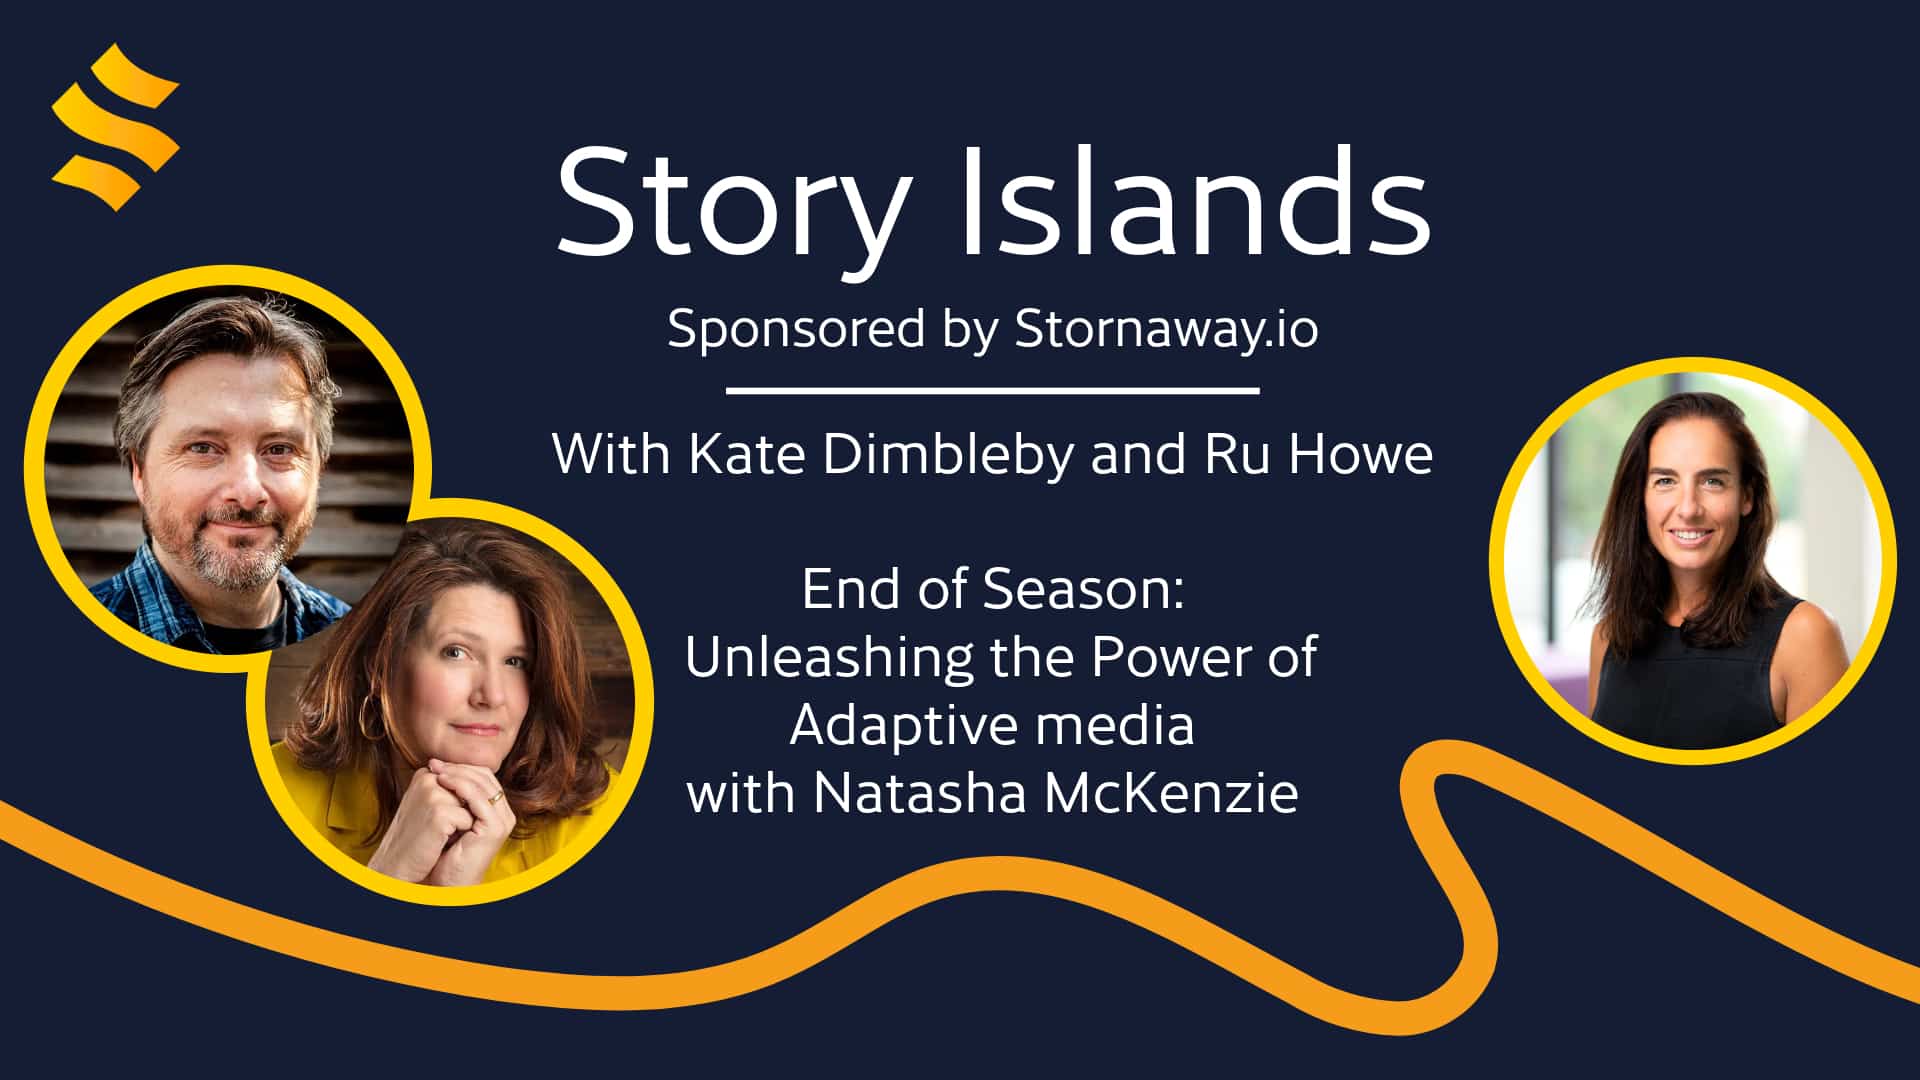 tory Islands poster - a navy background with headshots of Kate Dimbleby, Ru Howe and Natasha McKenzie.